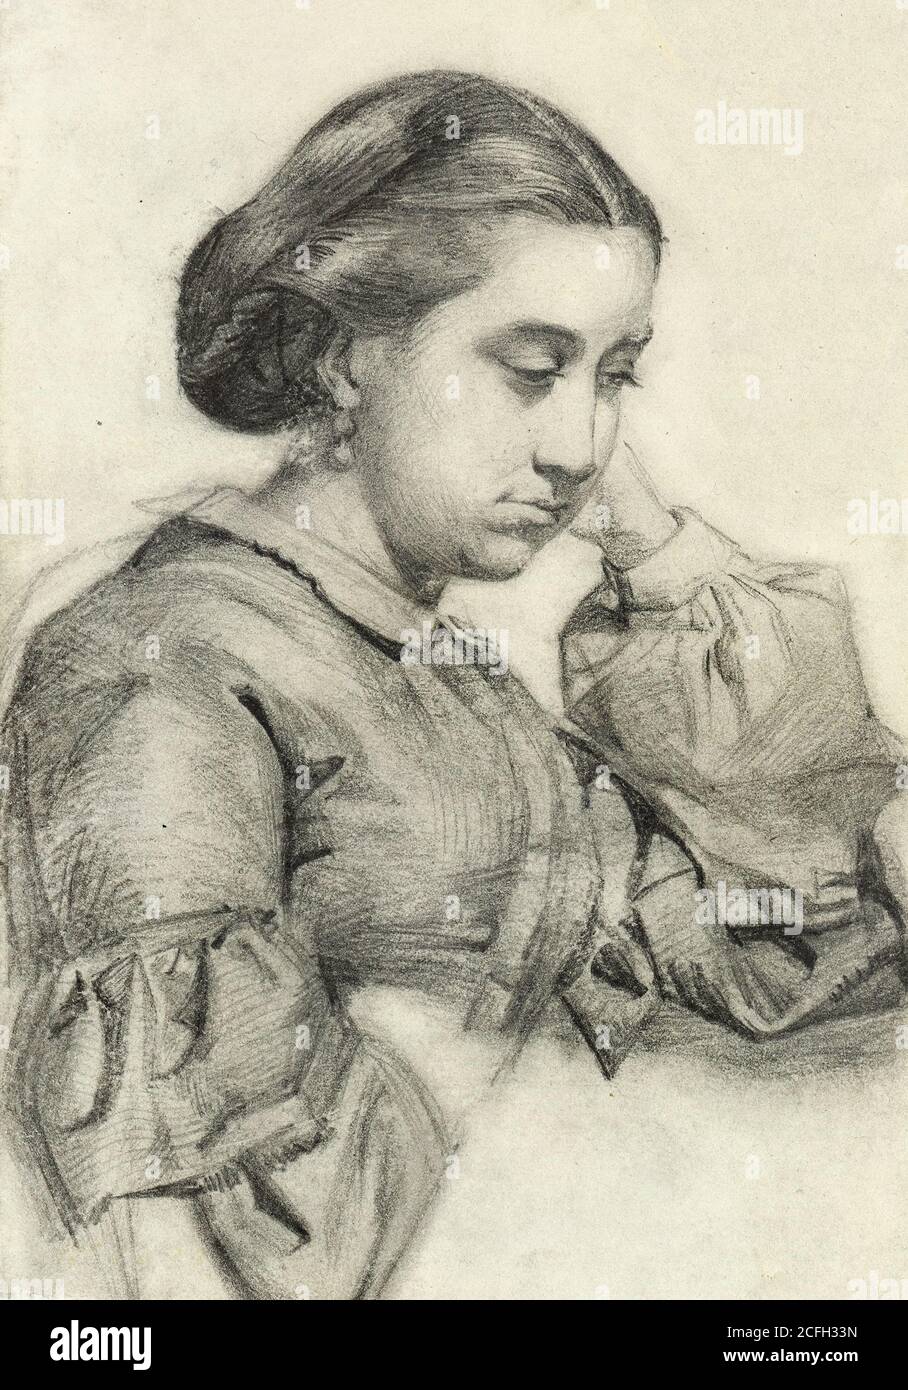 Maria Fortuny, Bust of a Young Lady, Circa 1857-1858, Graphite pencil on paper, Museu Nacional d'Art de Catalunya, Barcelona, Spain. Stock Photo